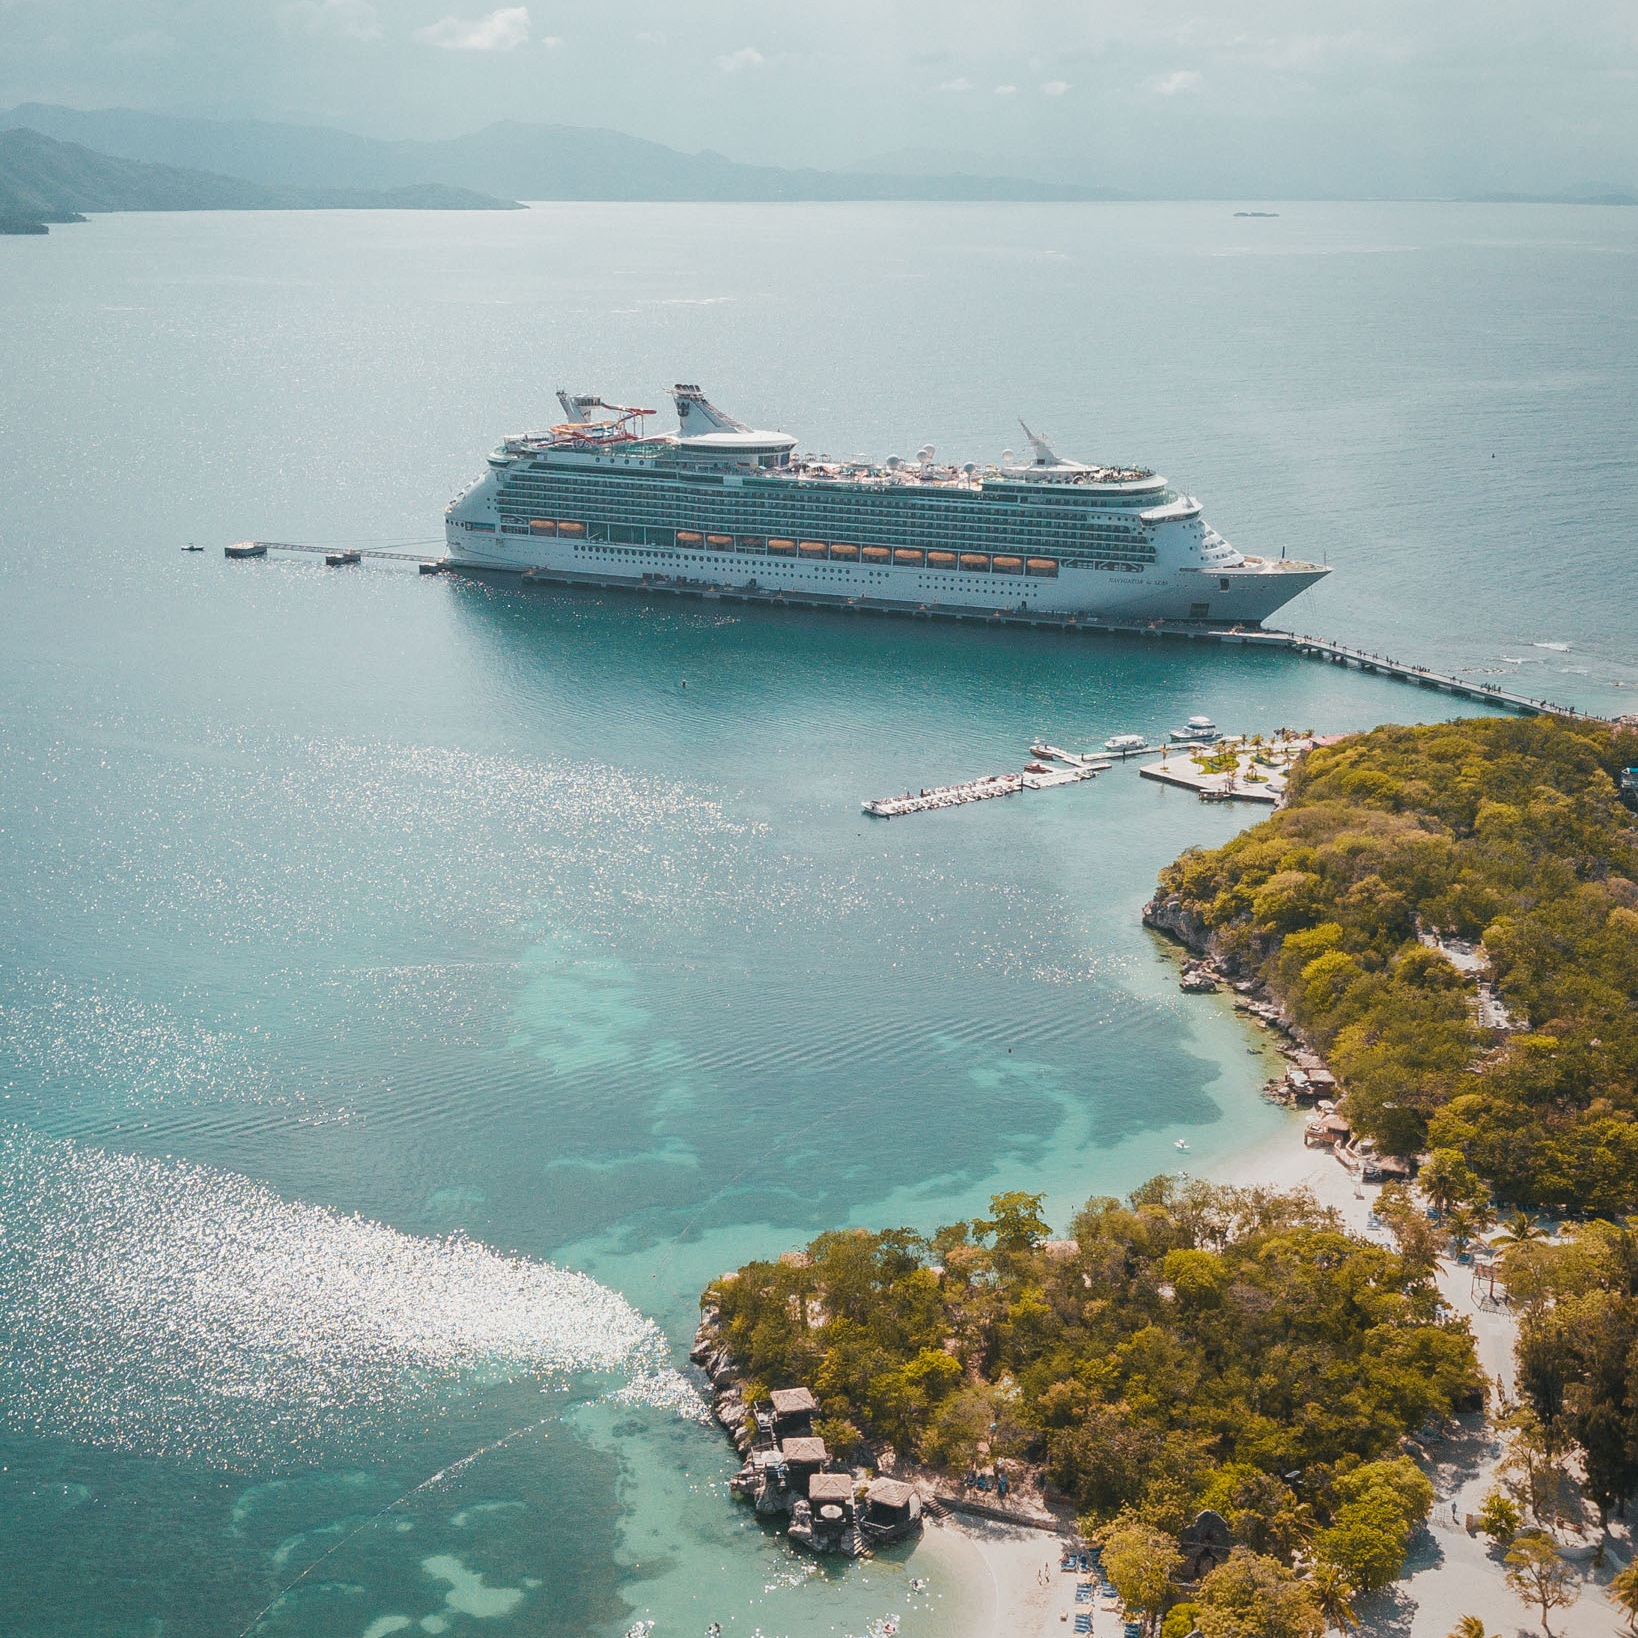 Cruise Review: Royal Caribbean's Navigator of the Seas